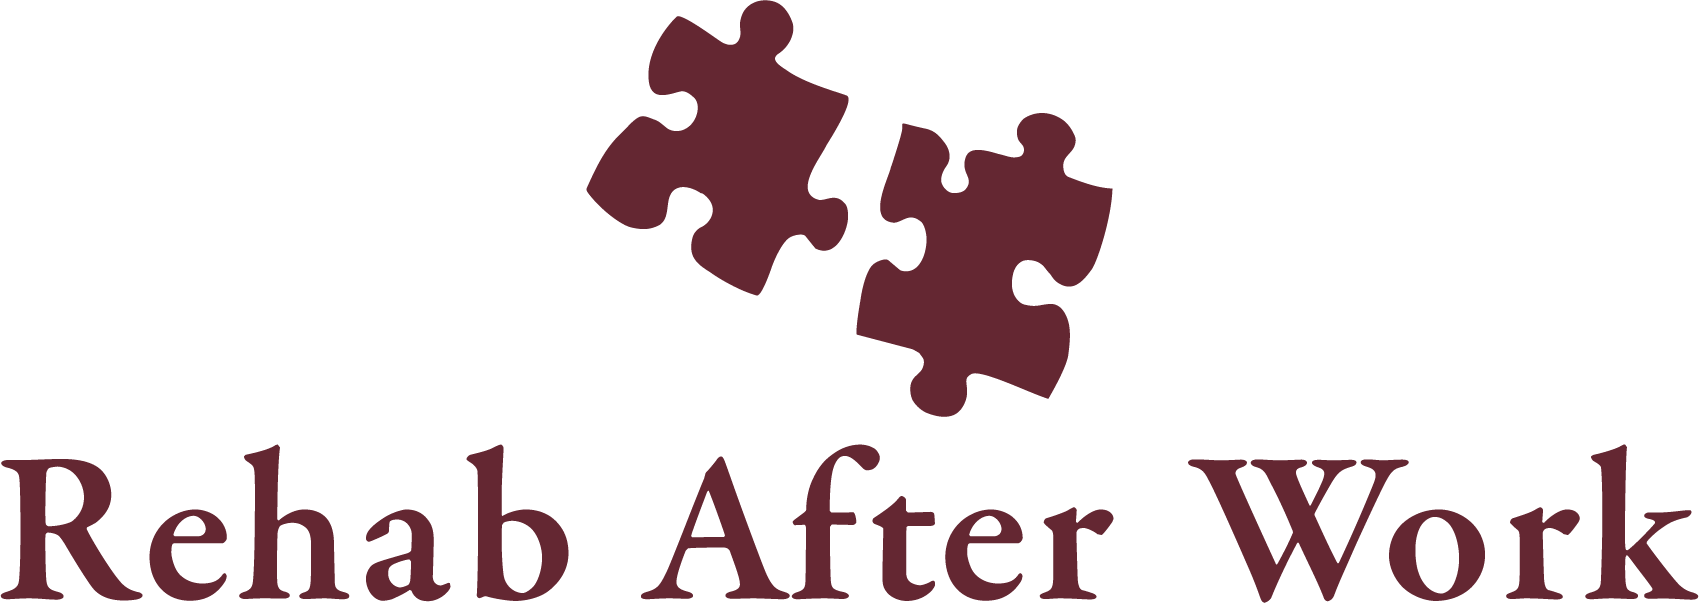 Rehab After Work logo